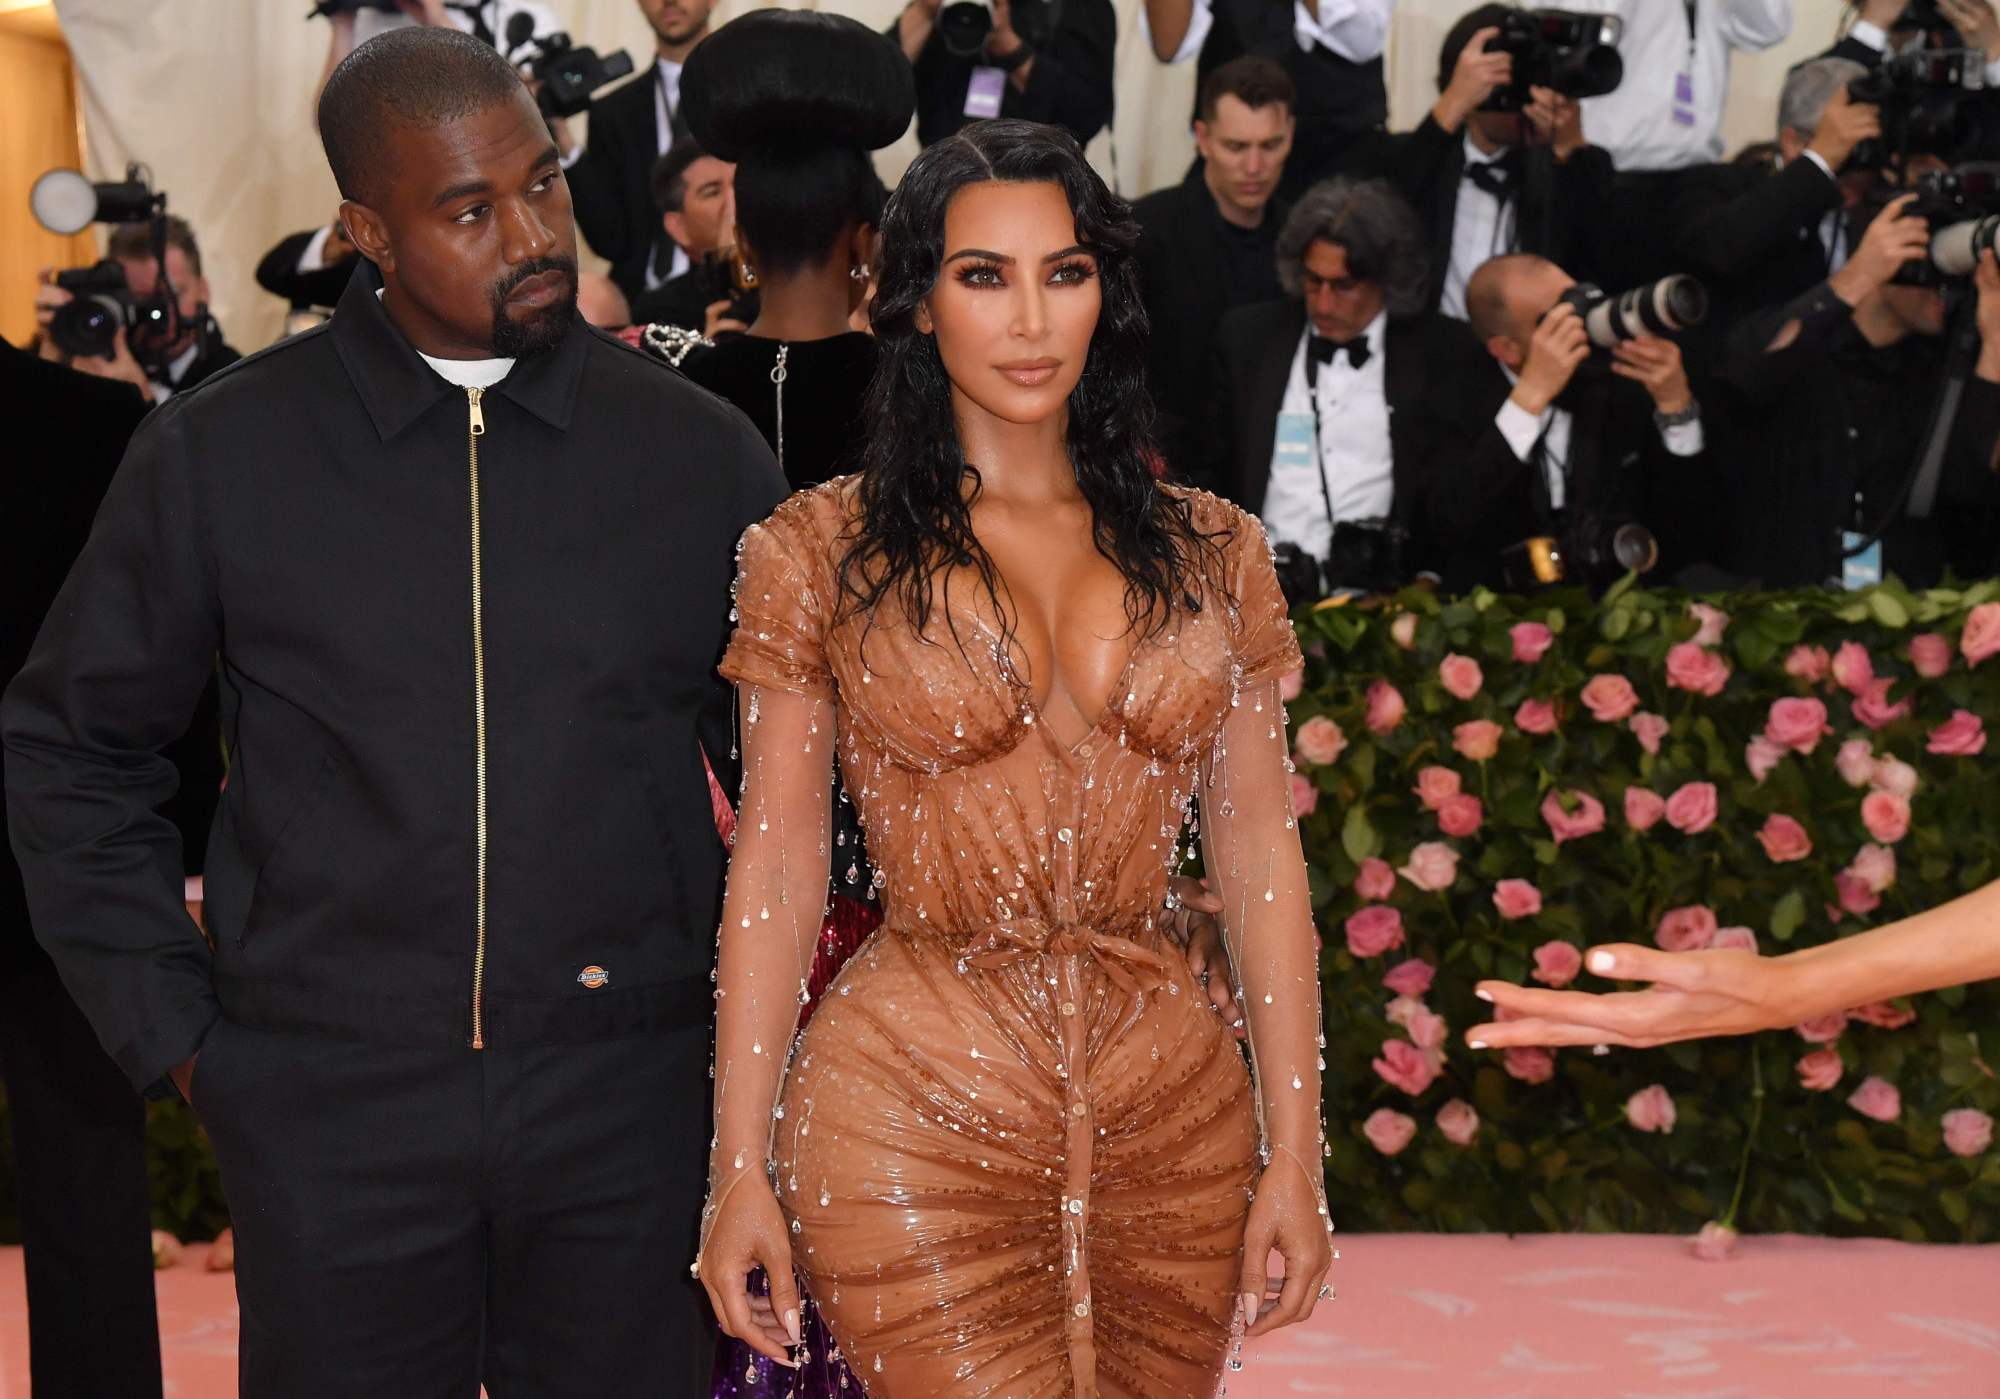 After backlash, Kim Kardashian West to drop Kimono name from